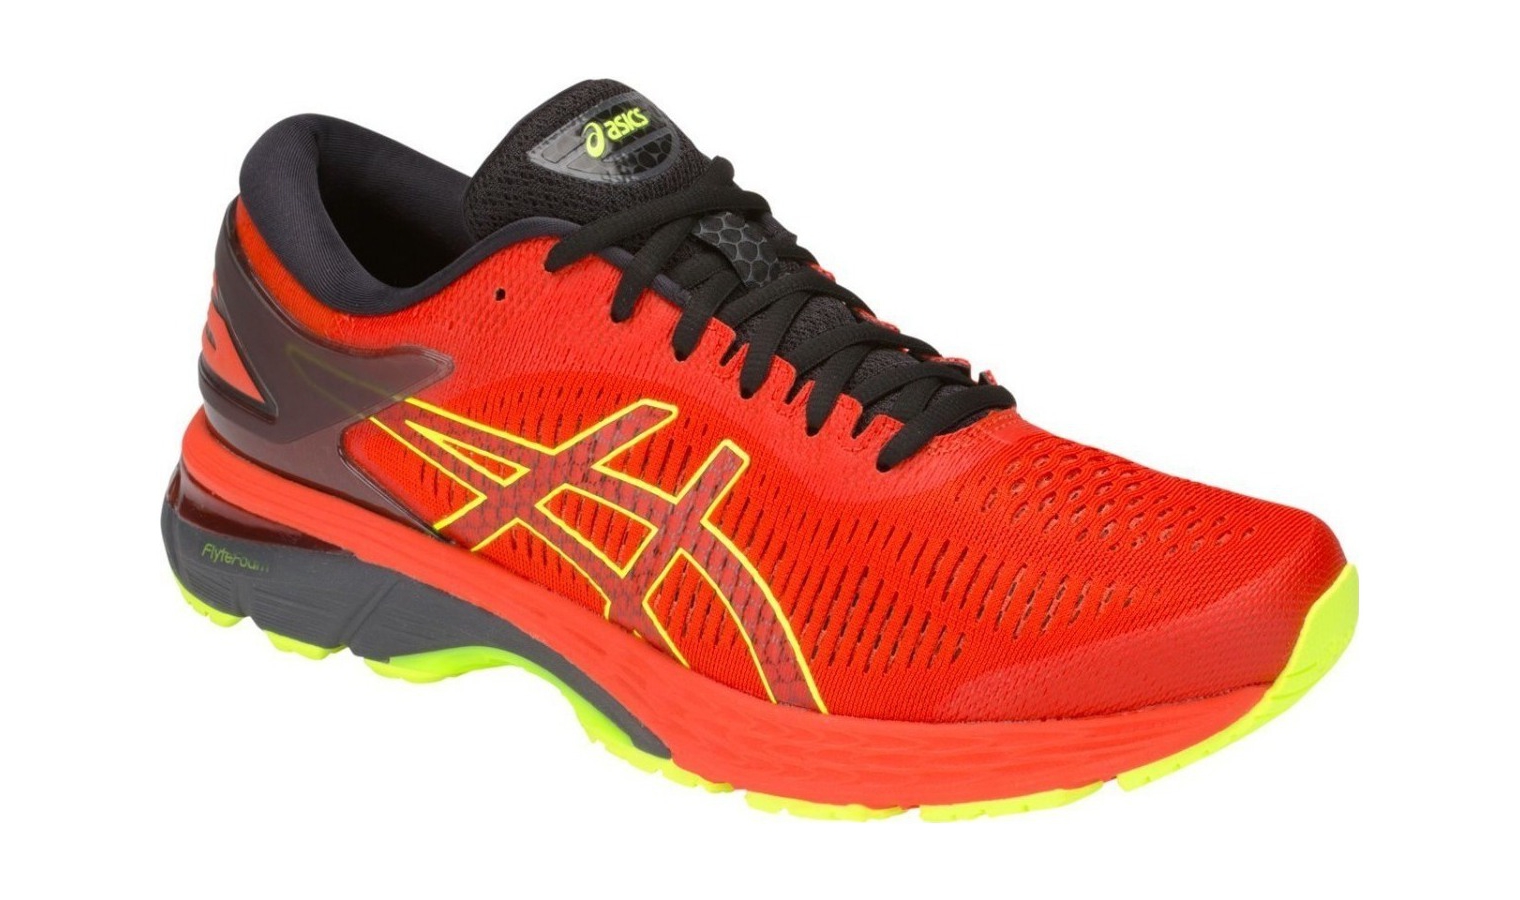 Men's running shoes Asics GEL-KAYANO 25 red | AD Sport.store